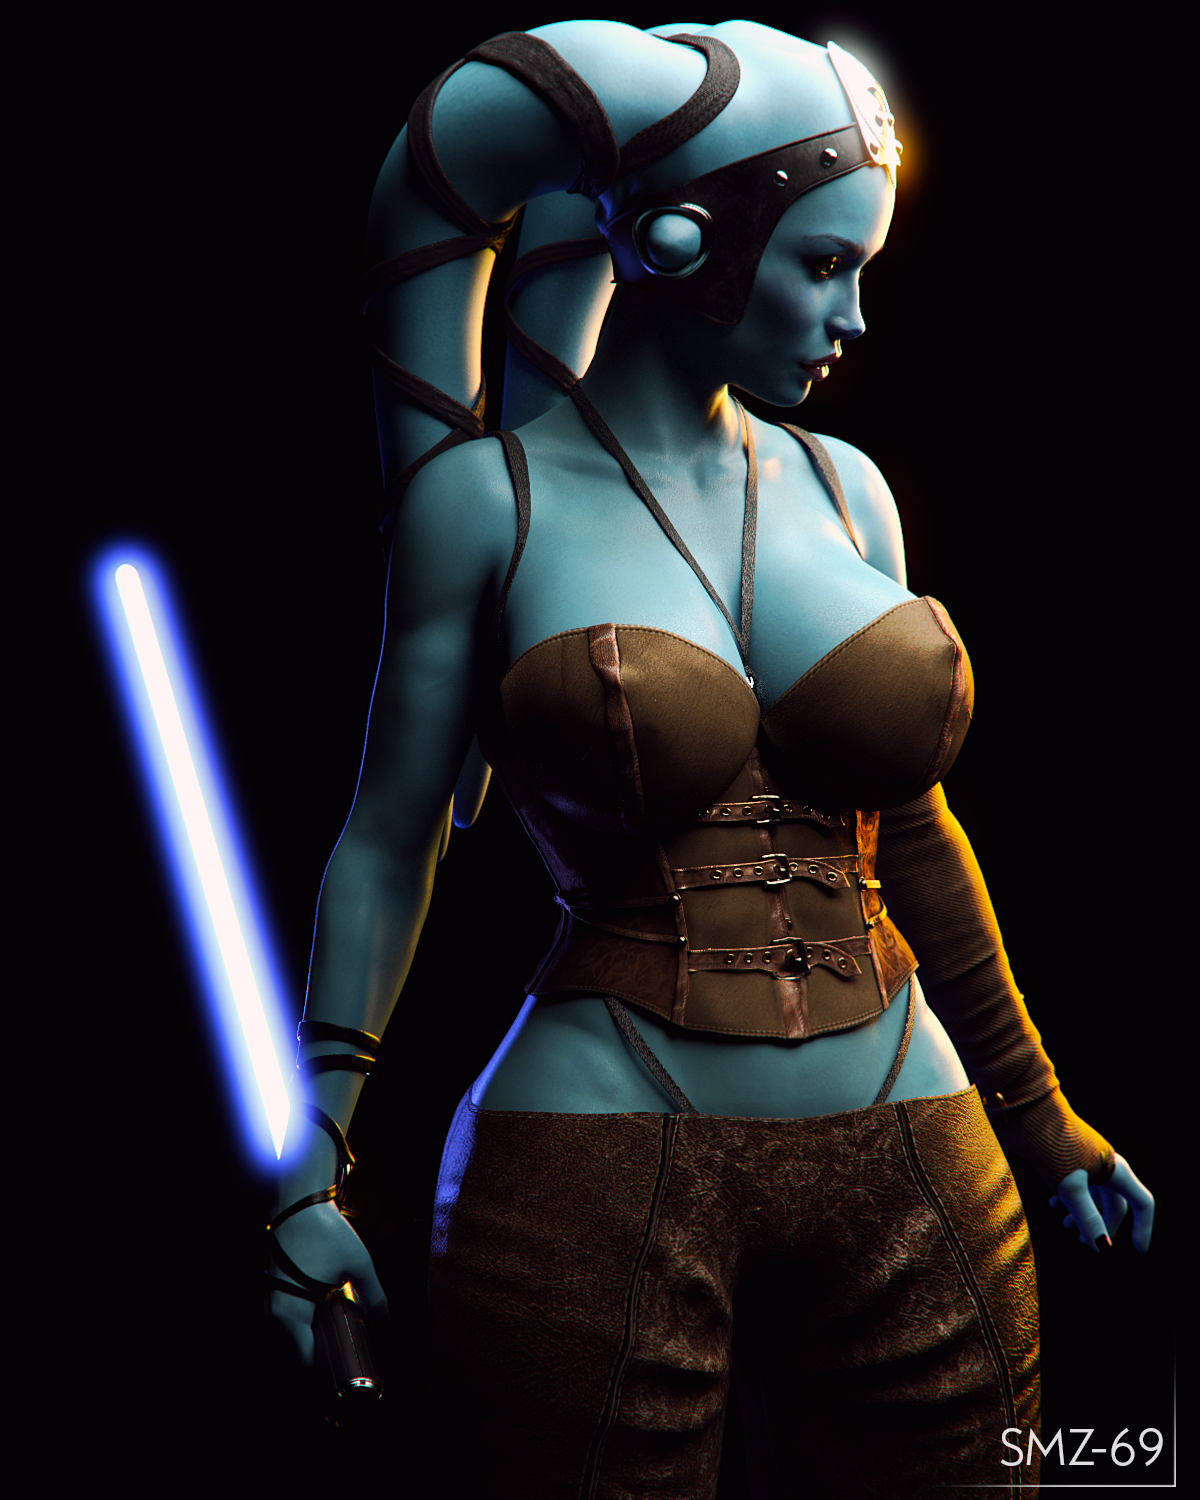 General 1200x1500 Star Wars Twi'lek blue skin Aayla Secura (Star Wars) lightsaber leather armor corset Smz-69